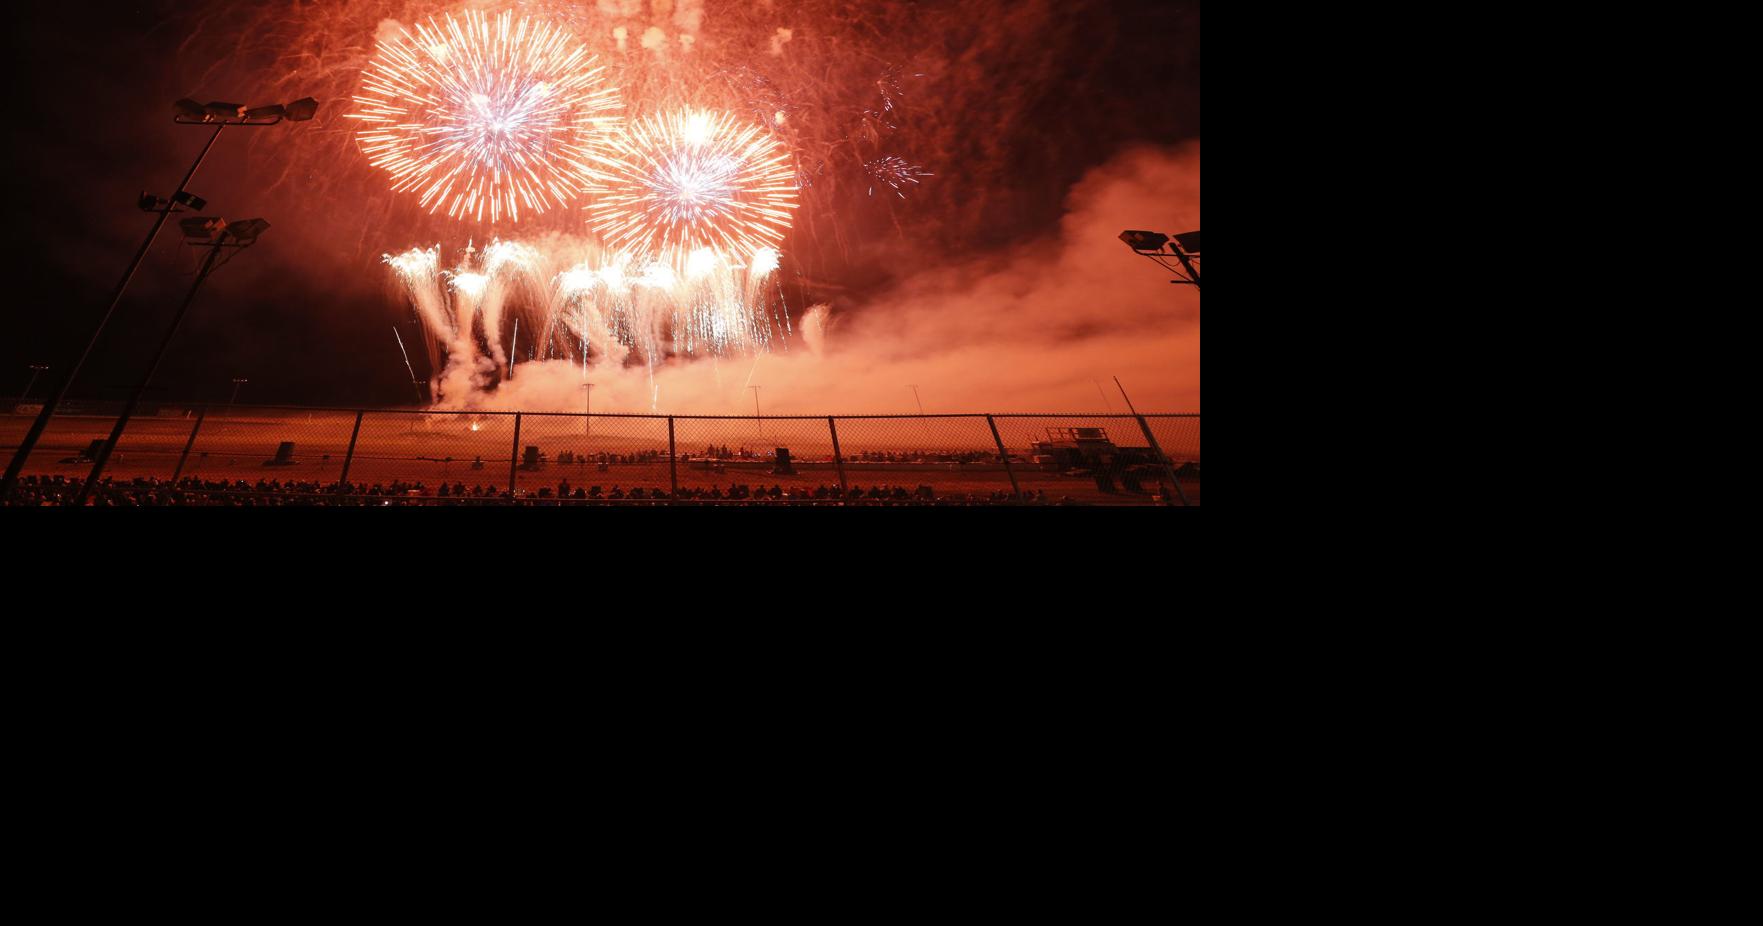 Mason City announced as host for PGI fireworks convention